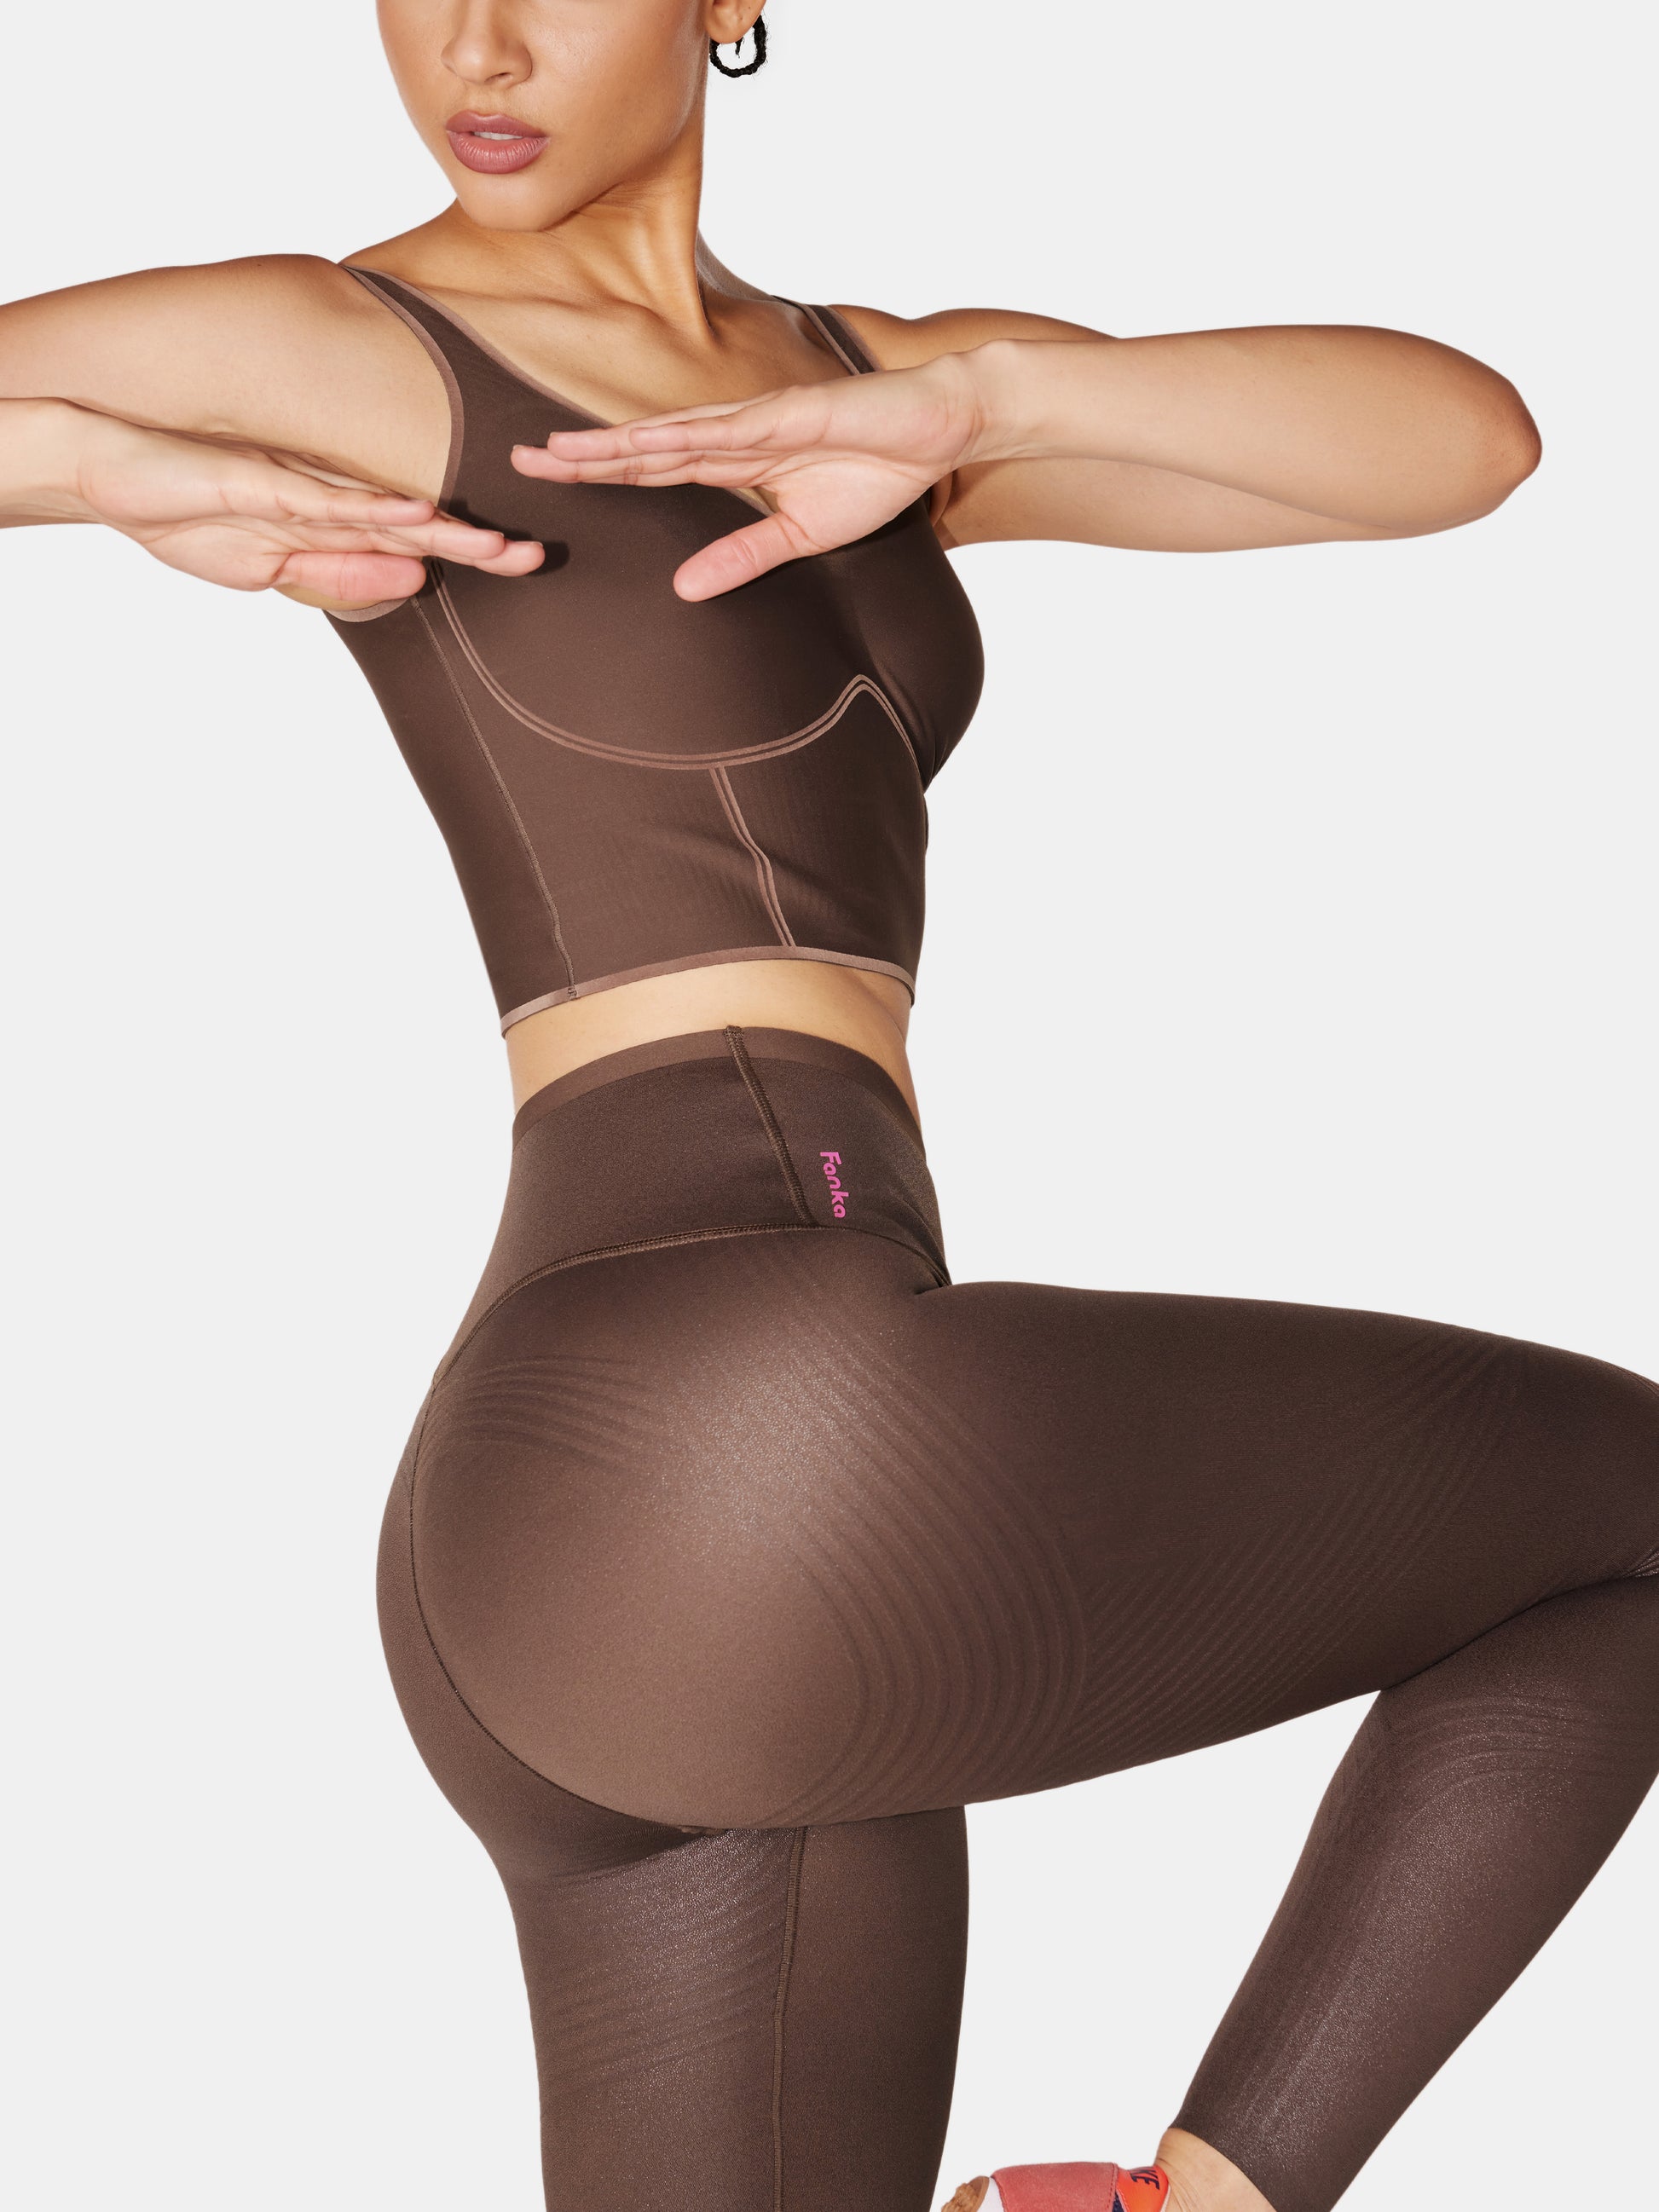 fanka faux leather leggings for butt lifting – Fanka